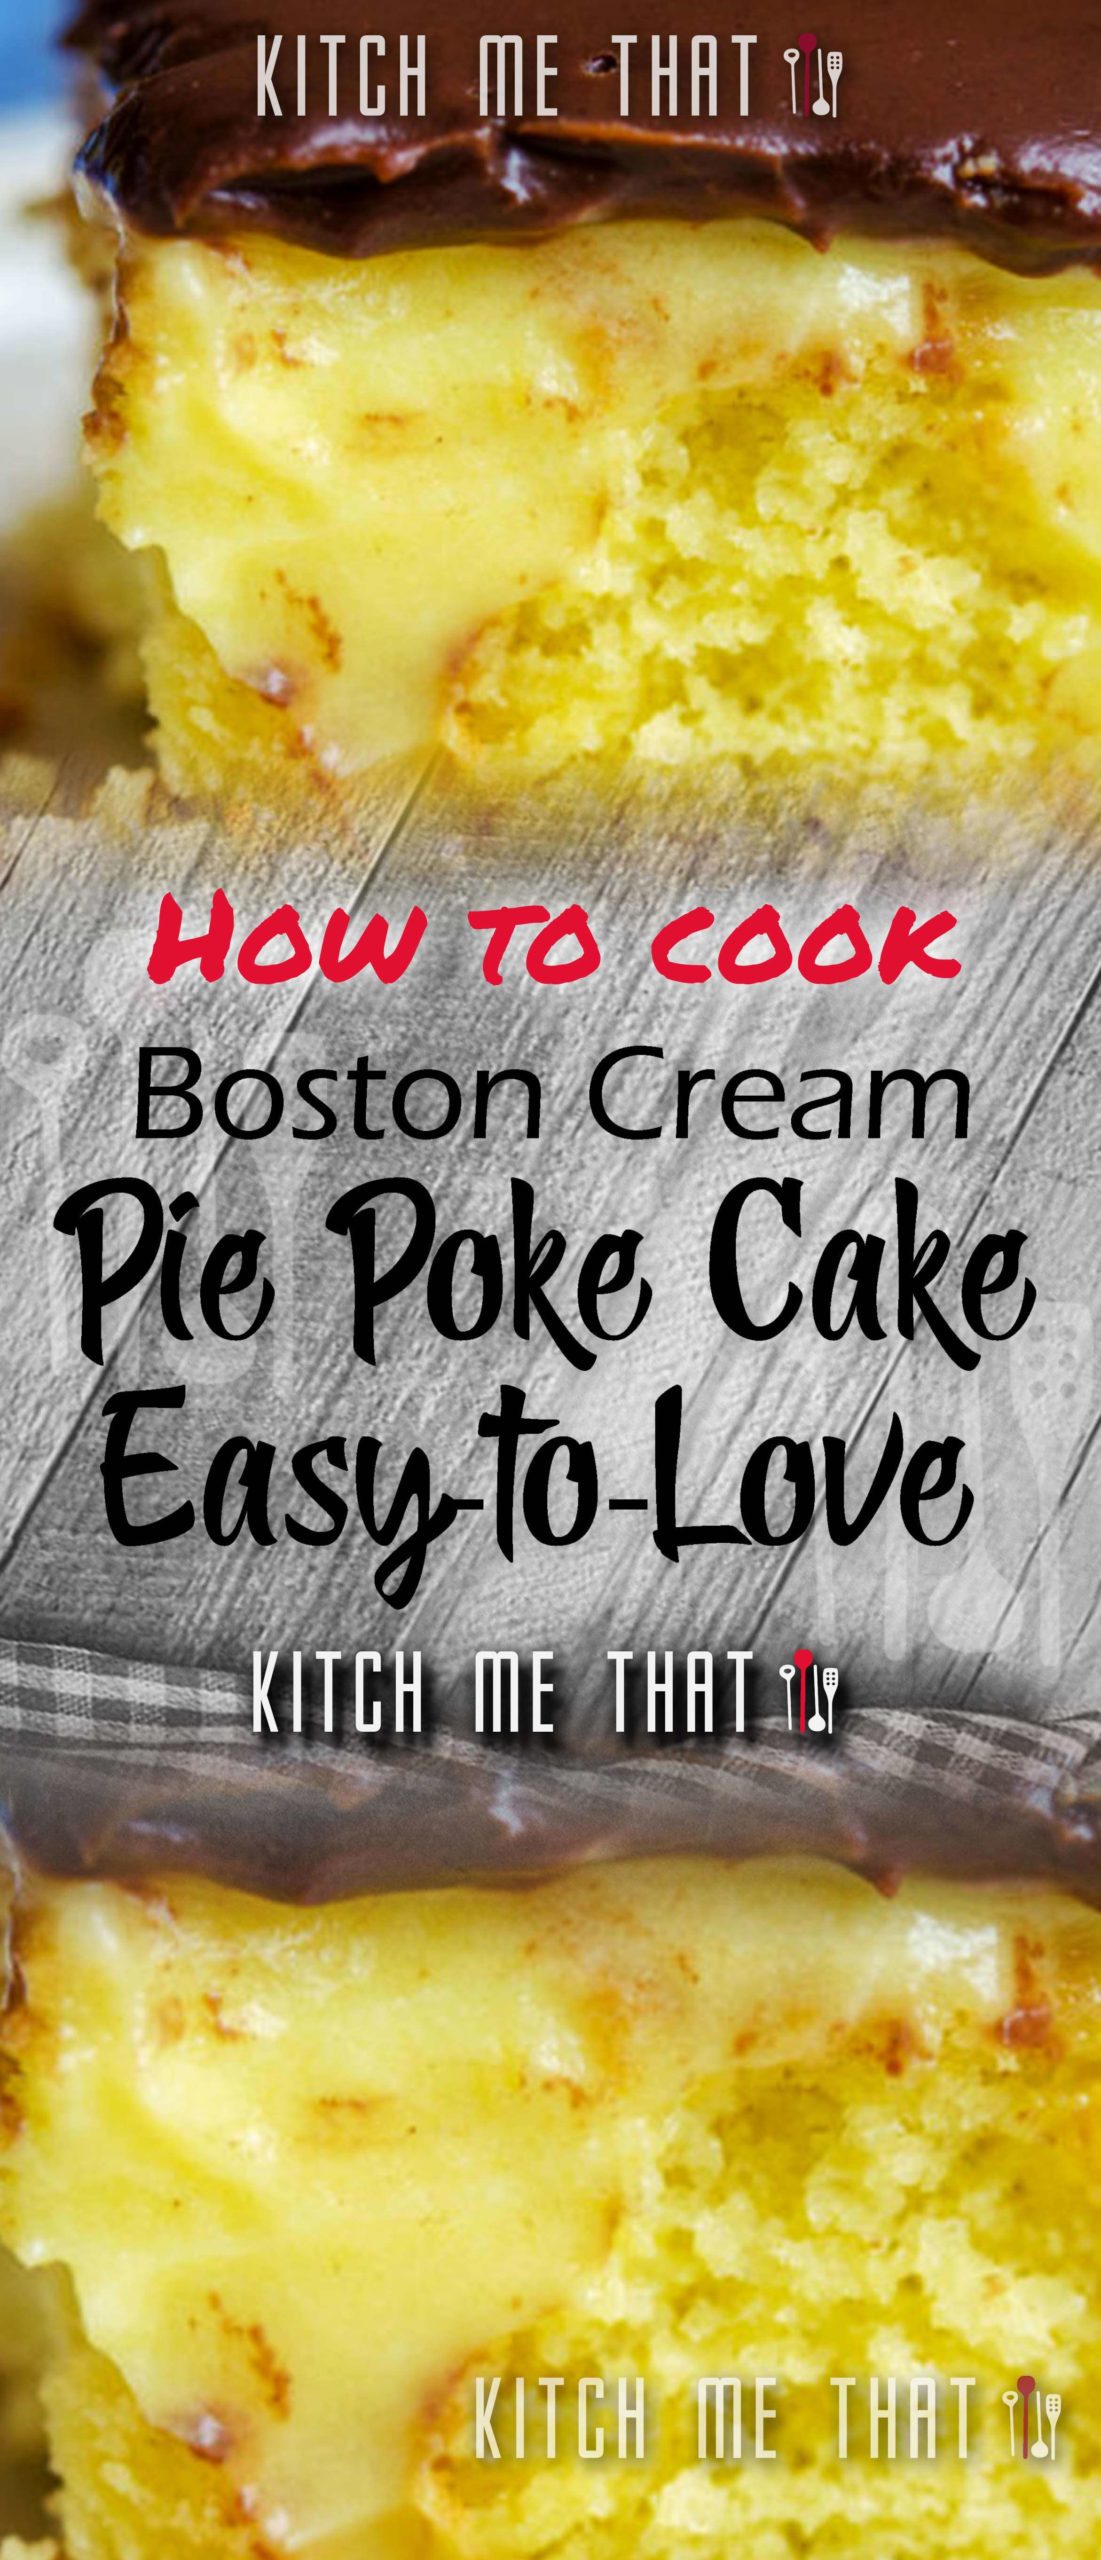 Boston Cream Pie Poke Cake